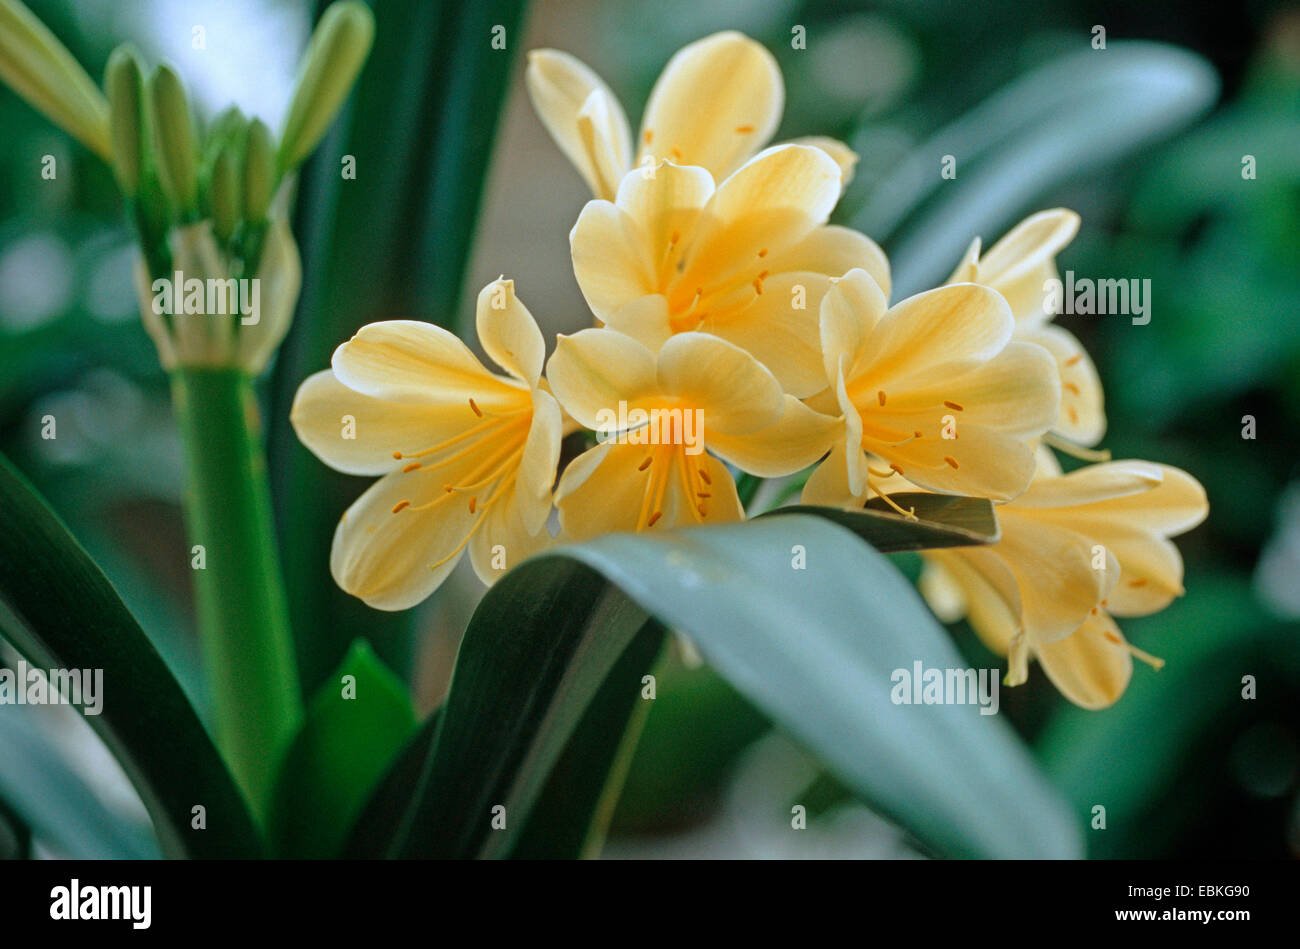 kaffir lily (Clivia miniata 'Citrina', Clivia miniata Citrina), yellow flowering cultivar Stock Photo